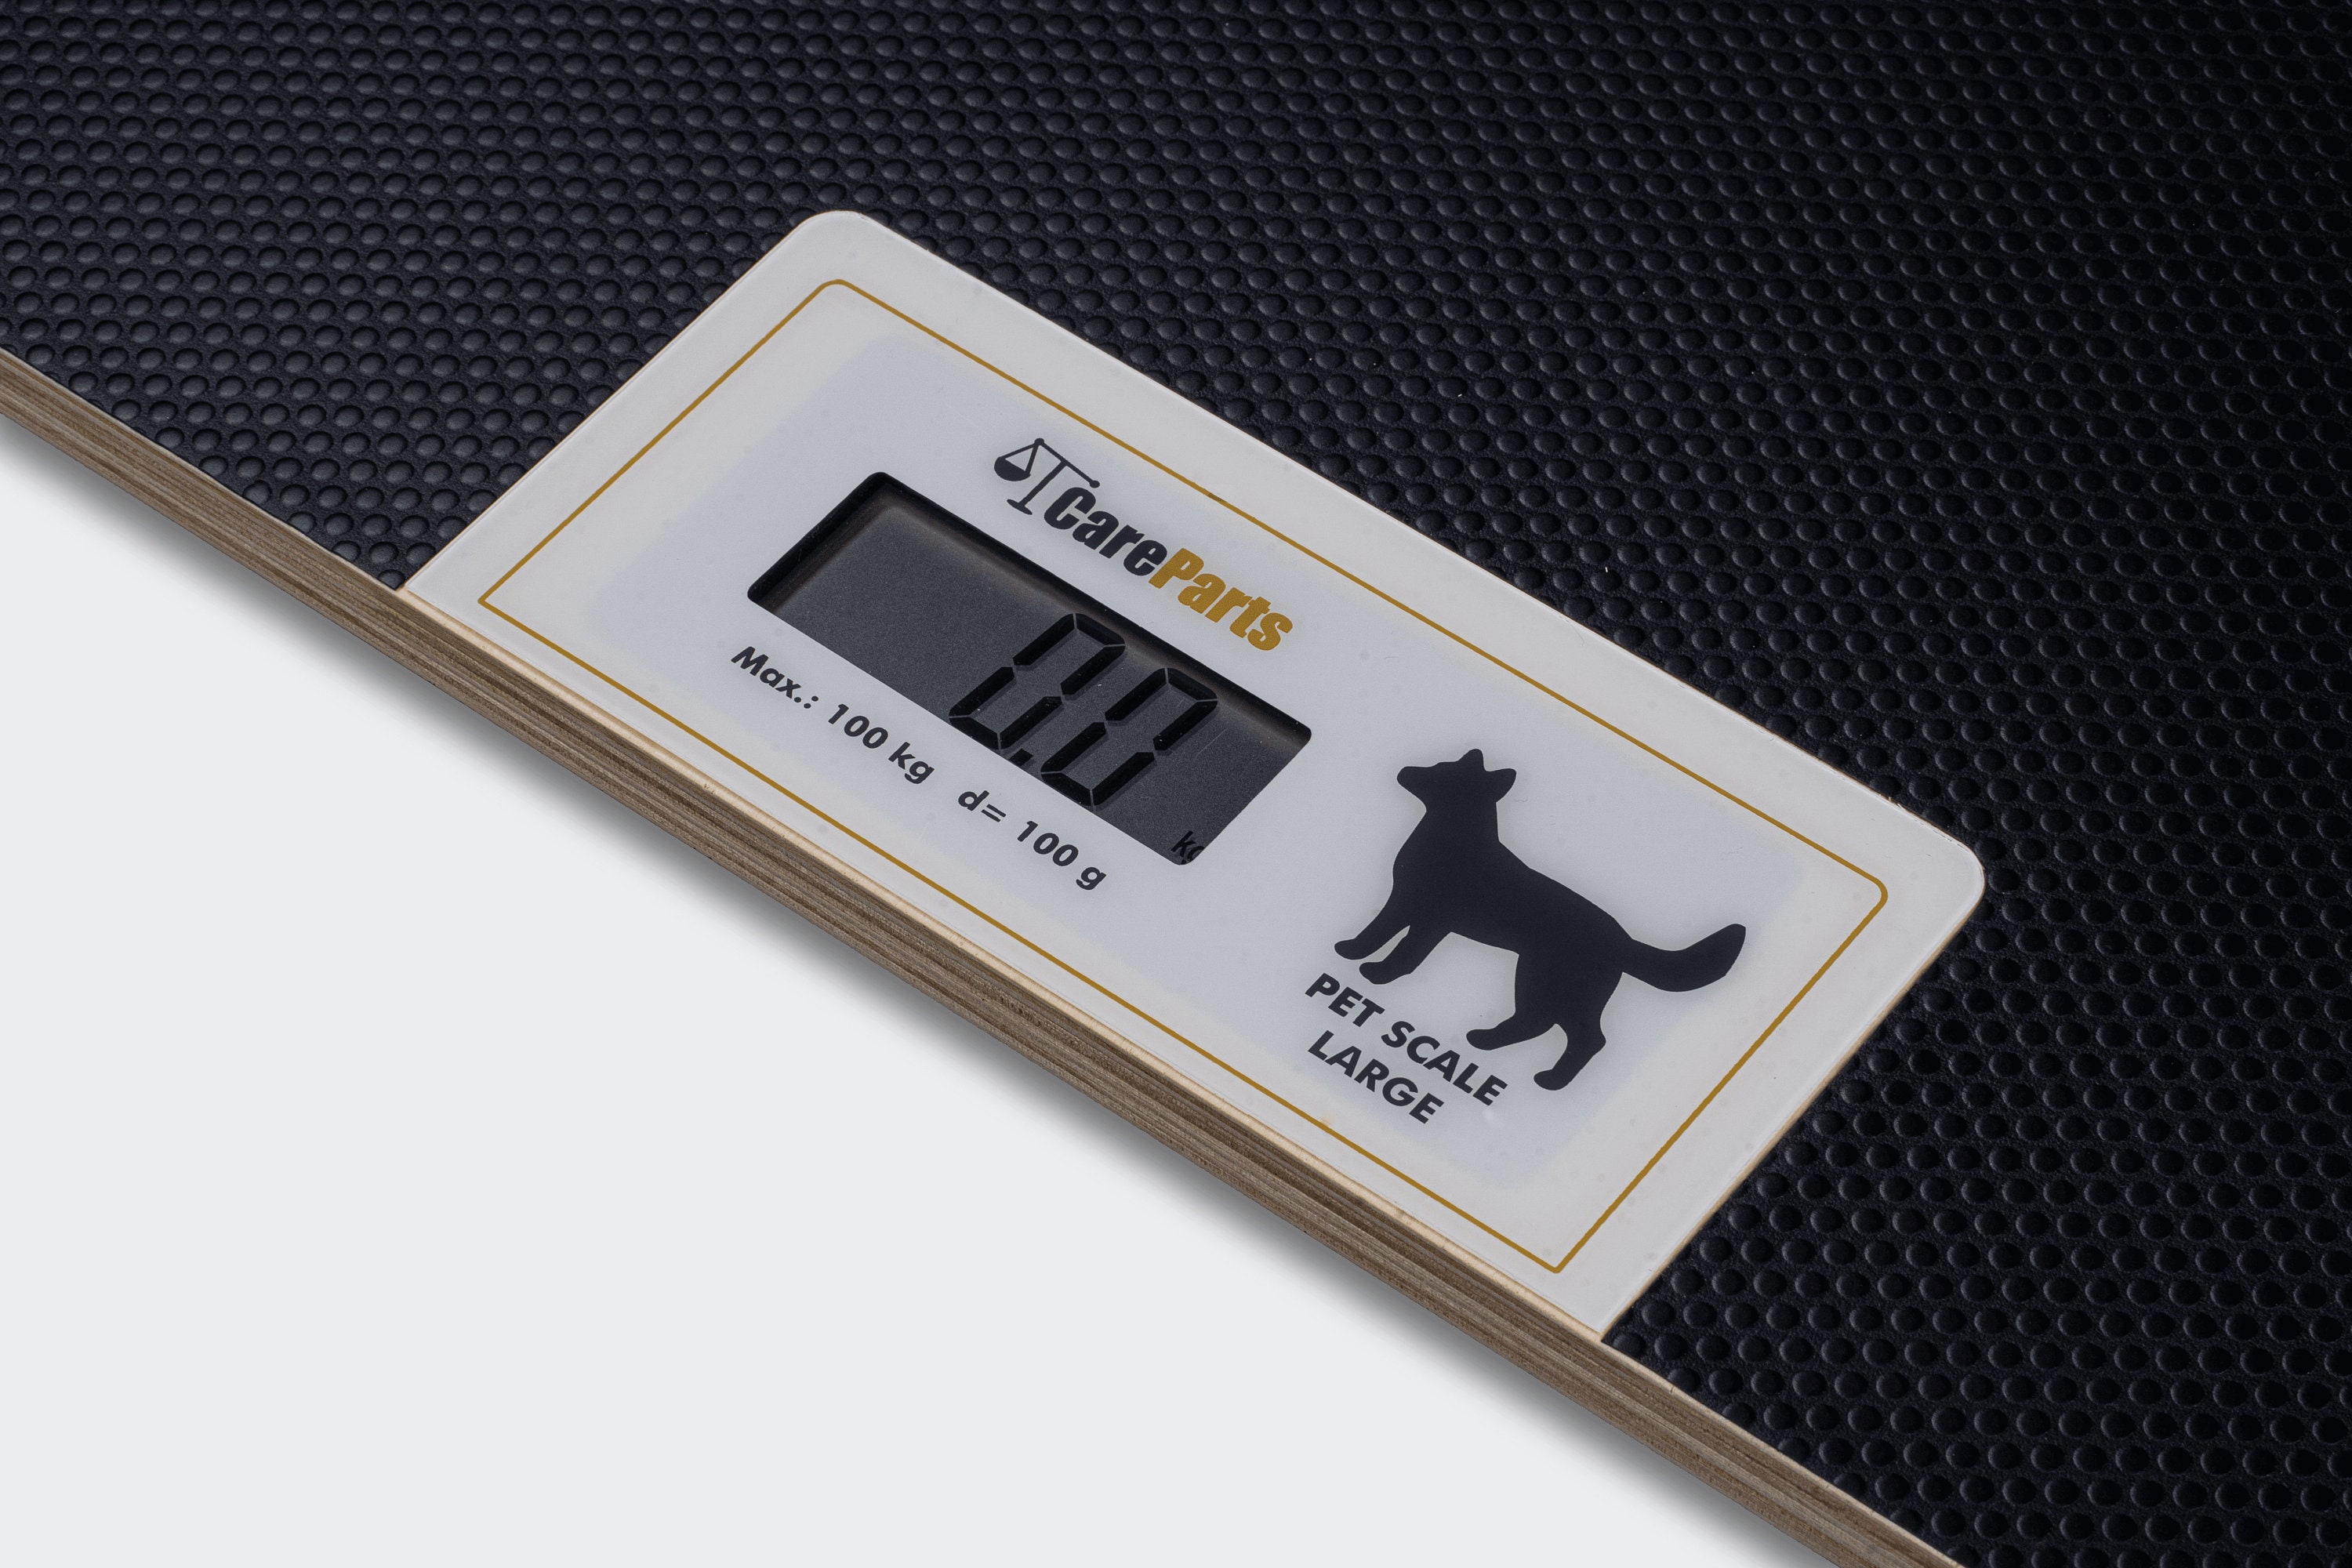 Veterinary Scale XXL Animal Scale Digital Dog Scale Cat Platform